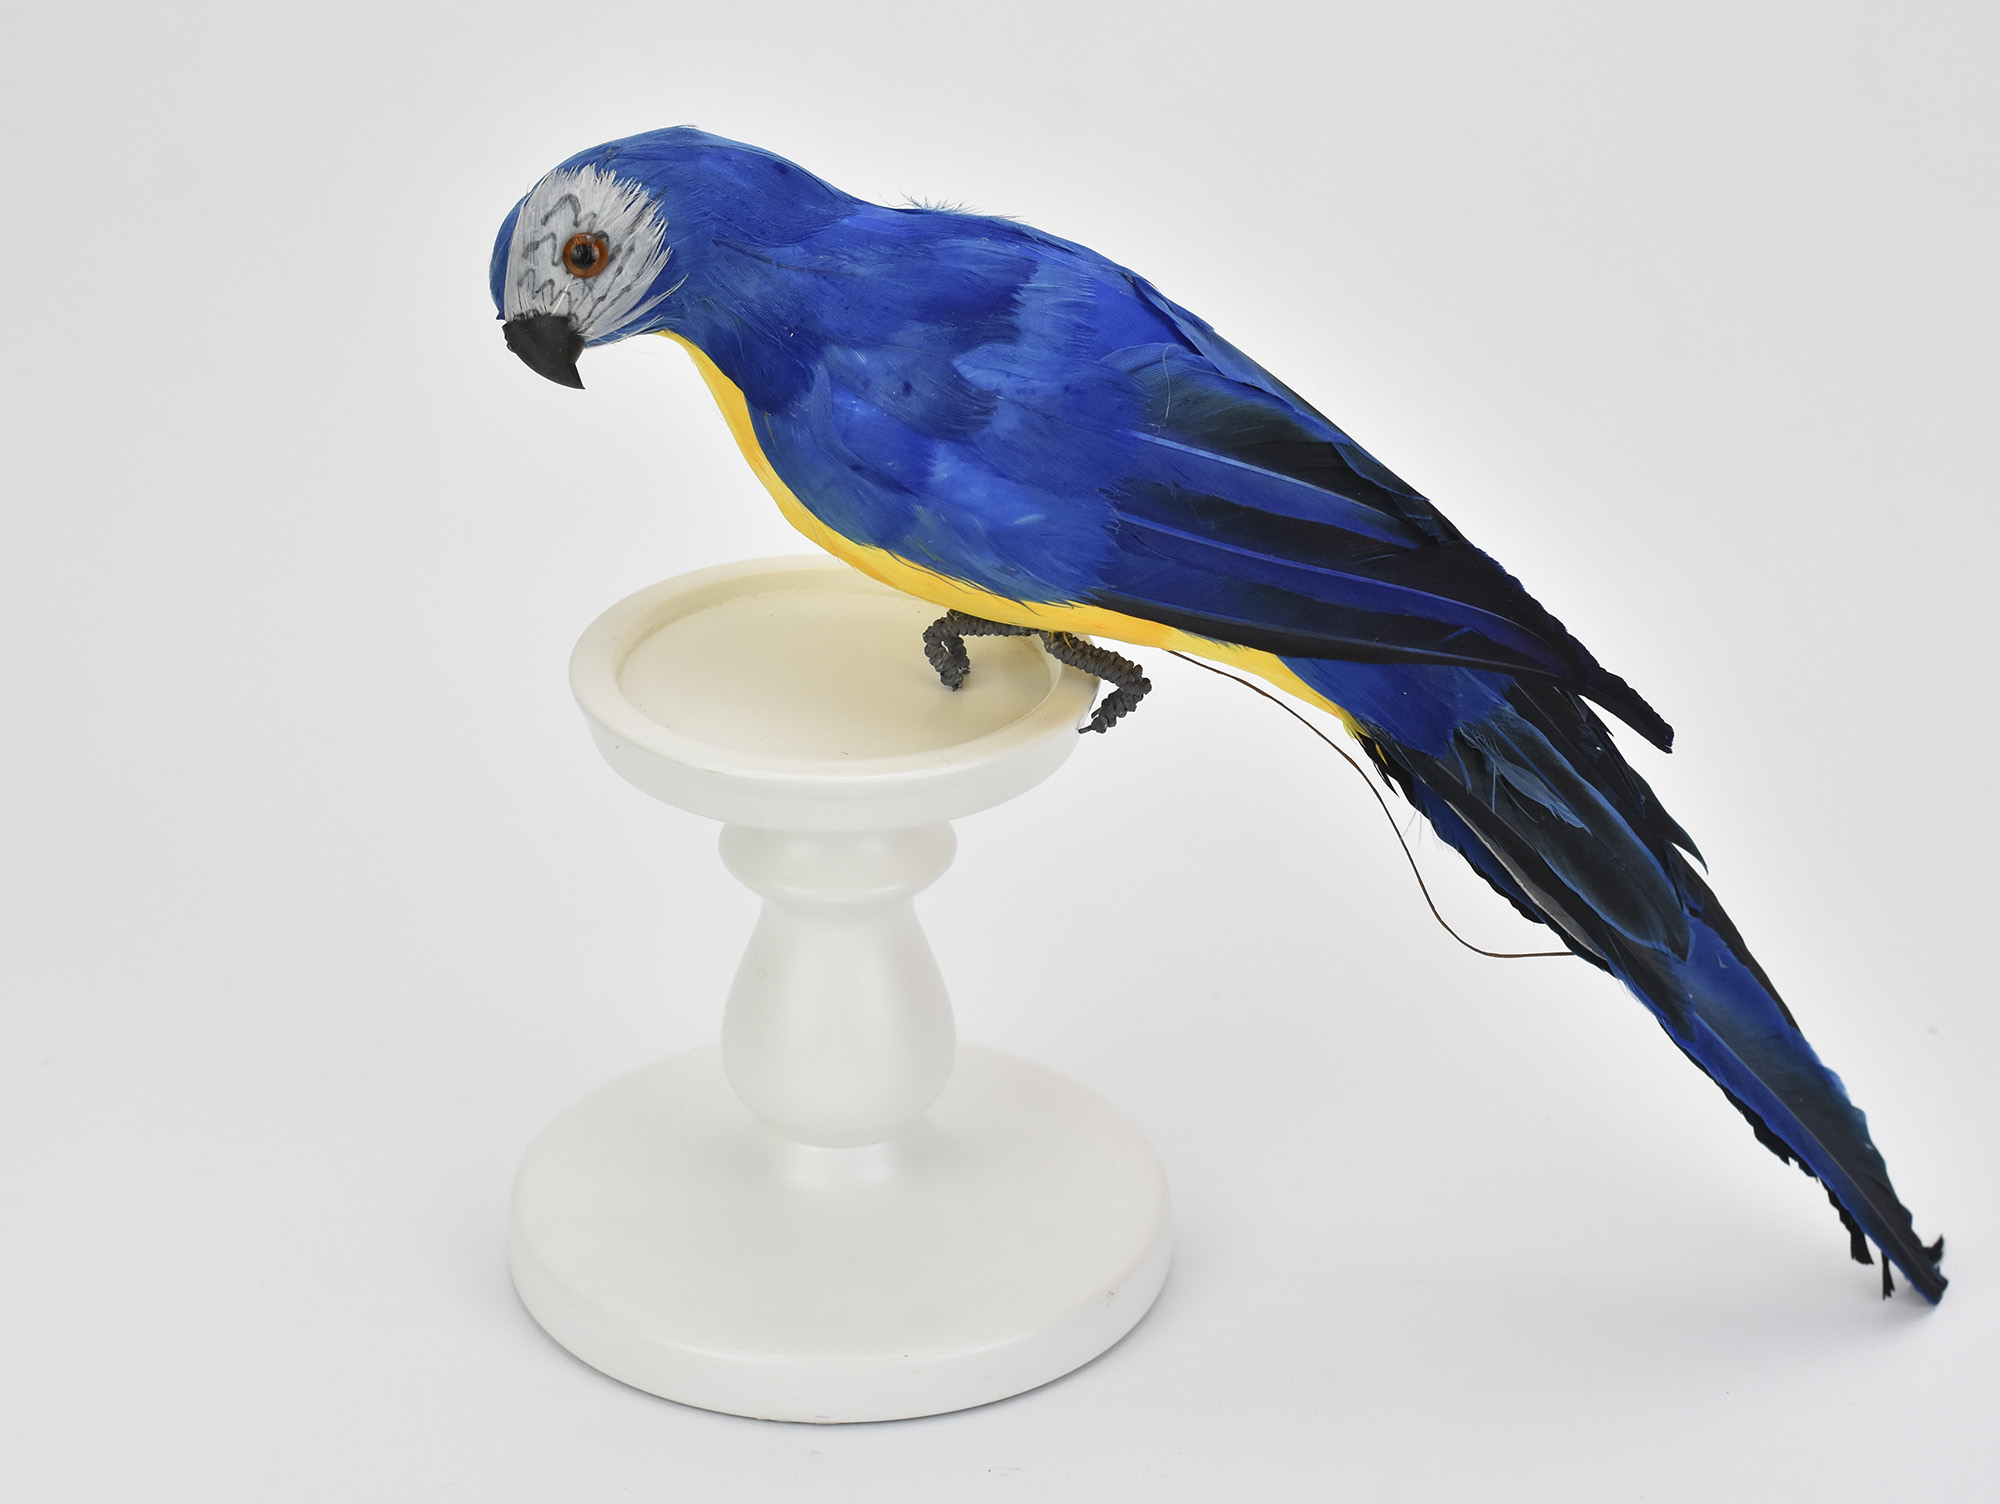 Papagáj kék - sárga 36cm